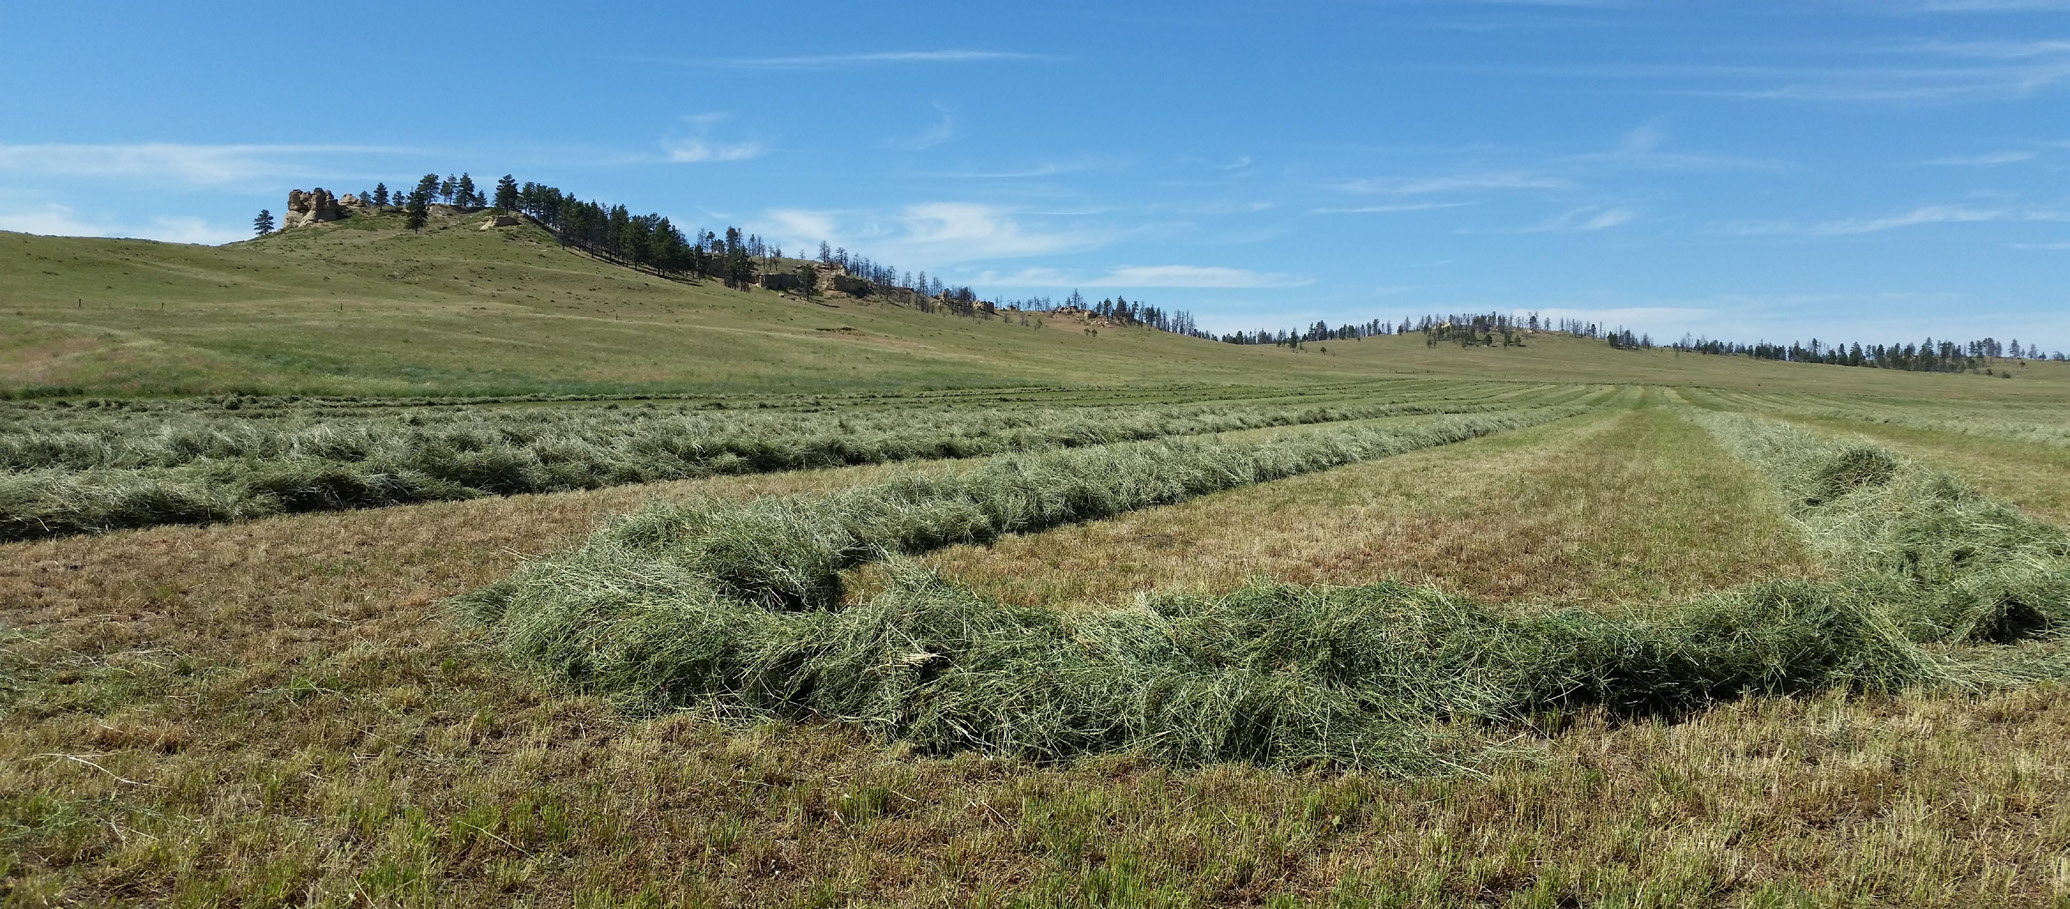 field of rows of cut hay